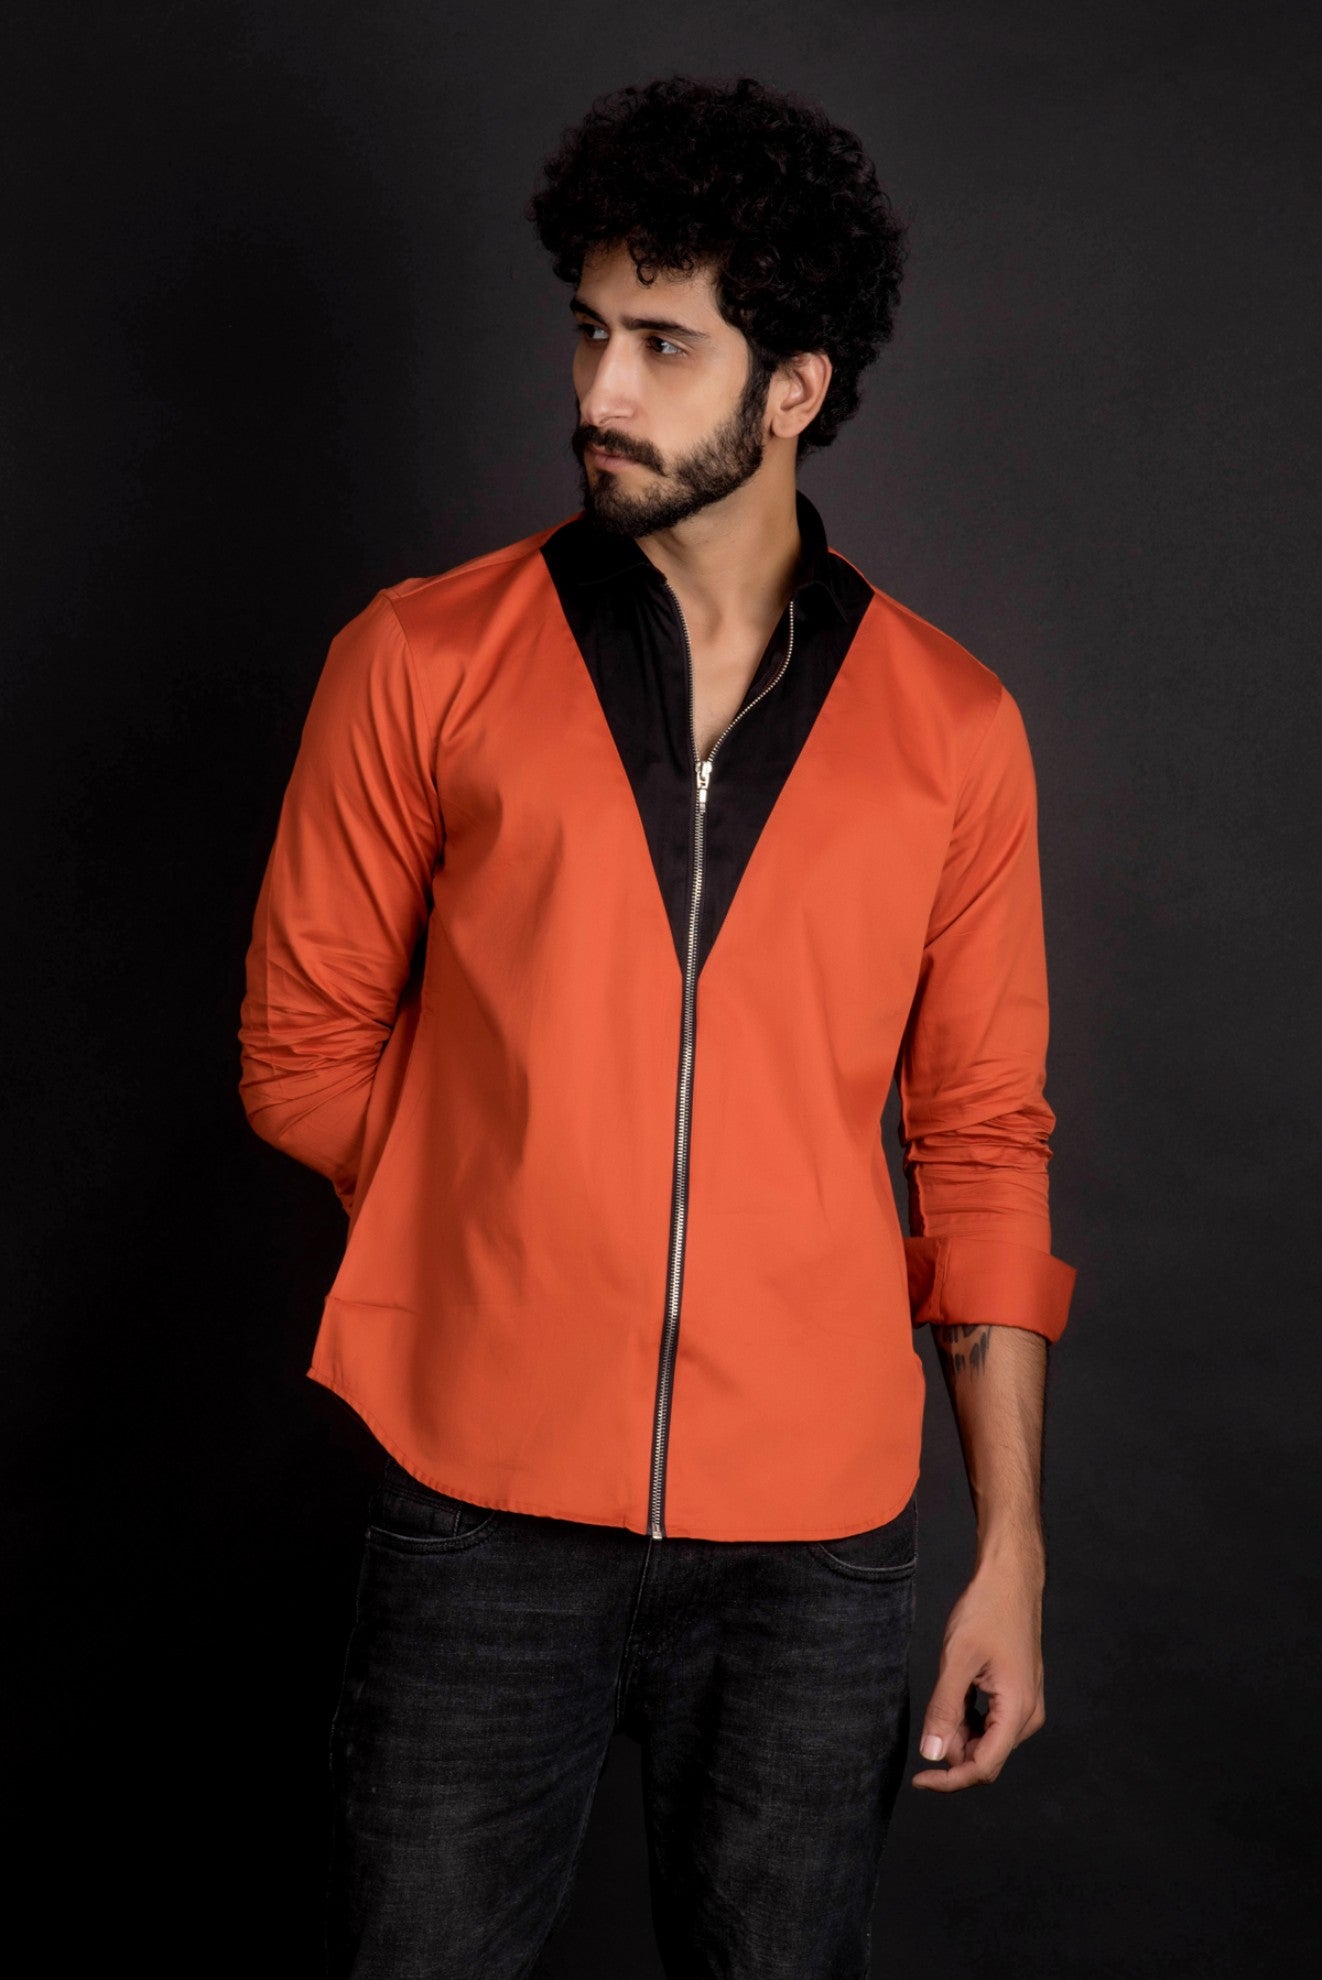 Tangerine Zipper Style Shirt